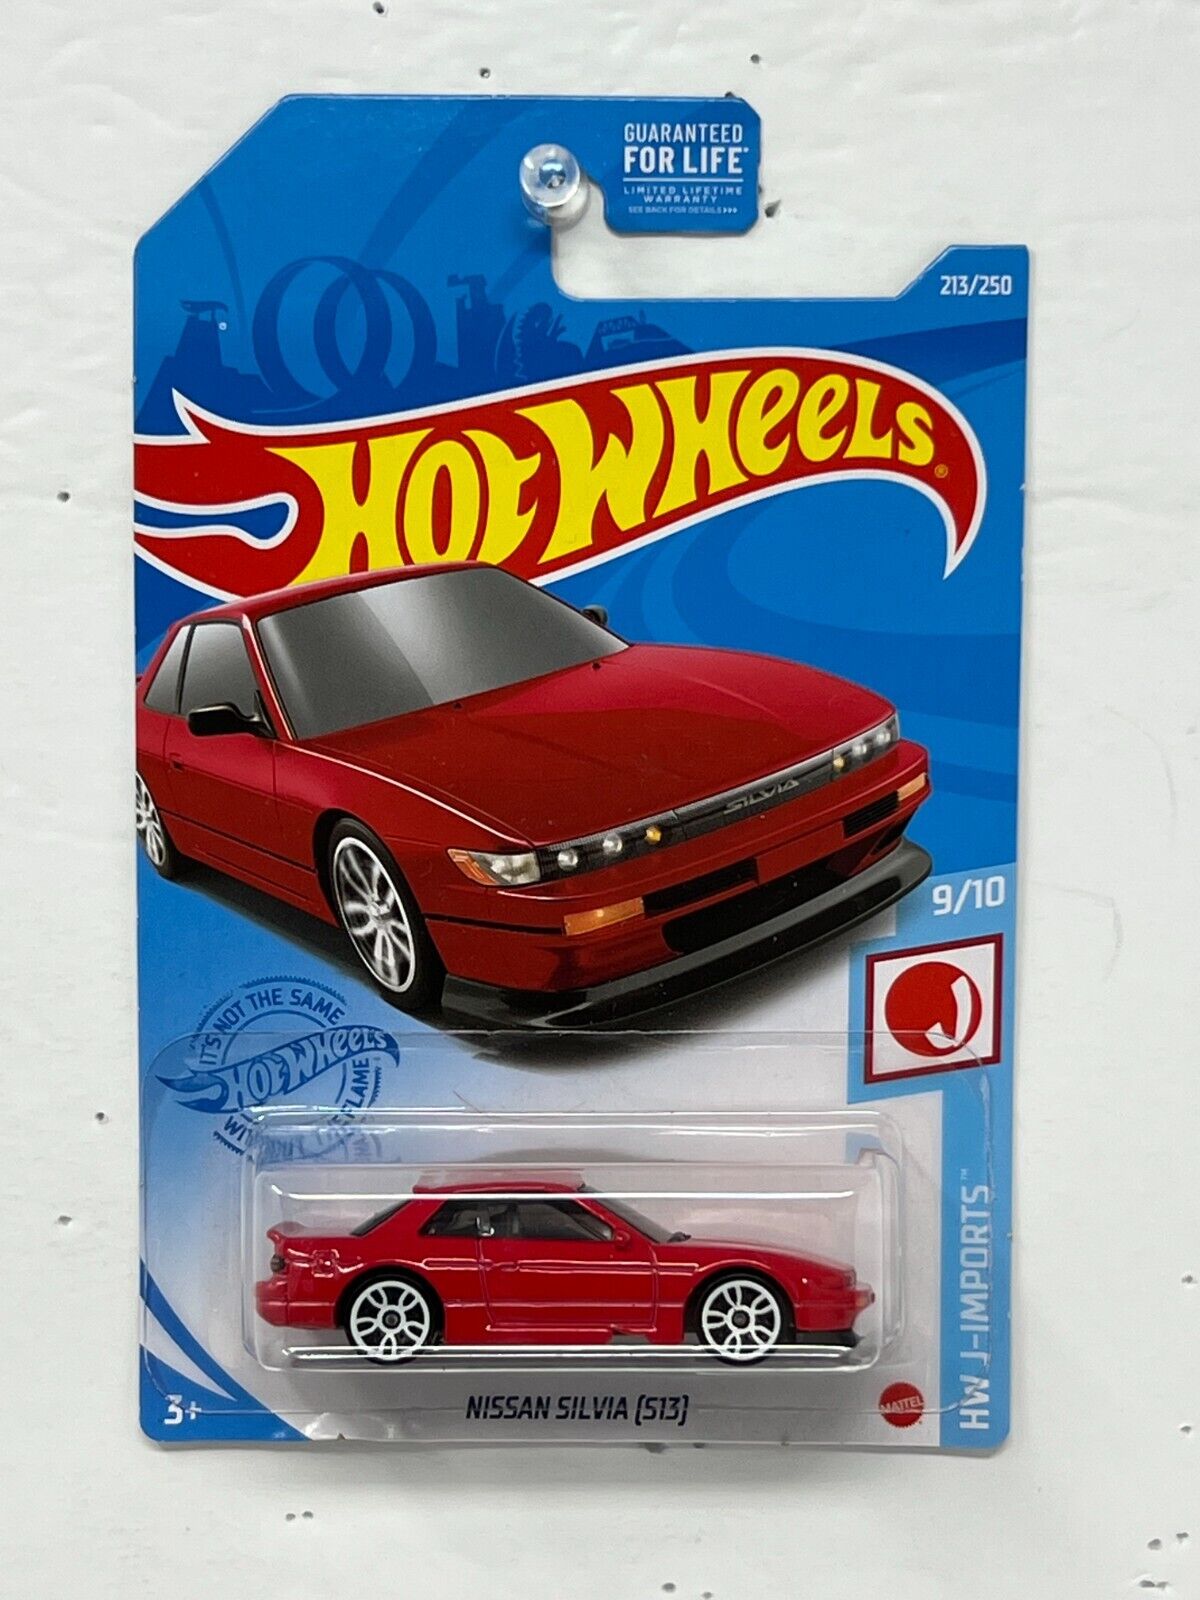 Hot Wheels HW J-Imports Nissan Silvia (S13) JDM 1:64 Diecast Red